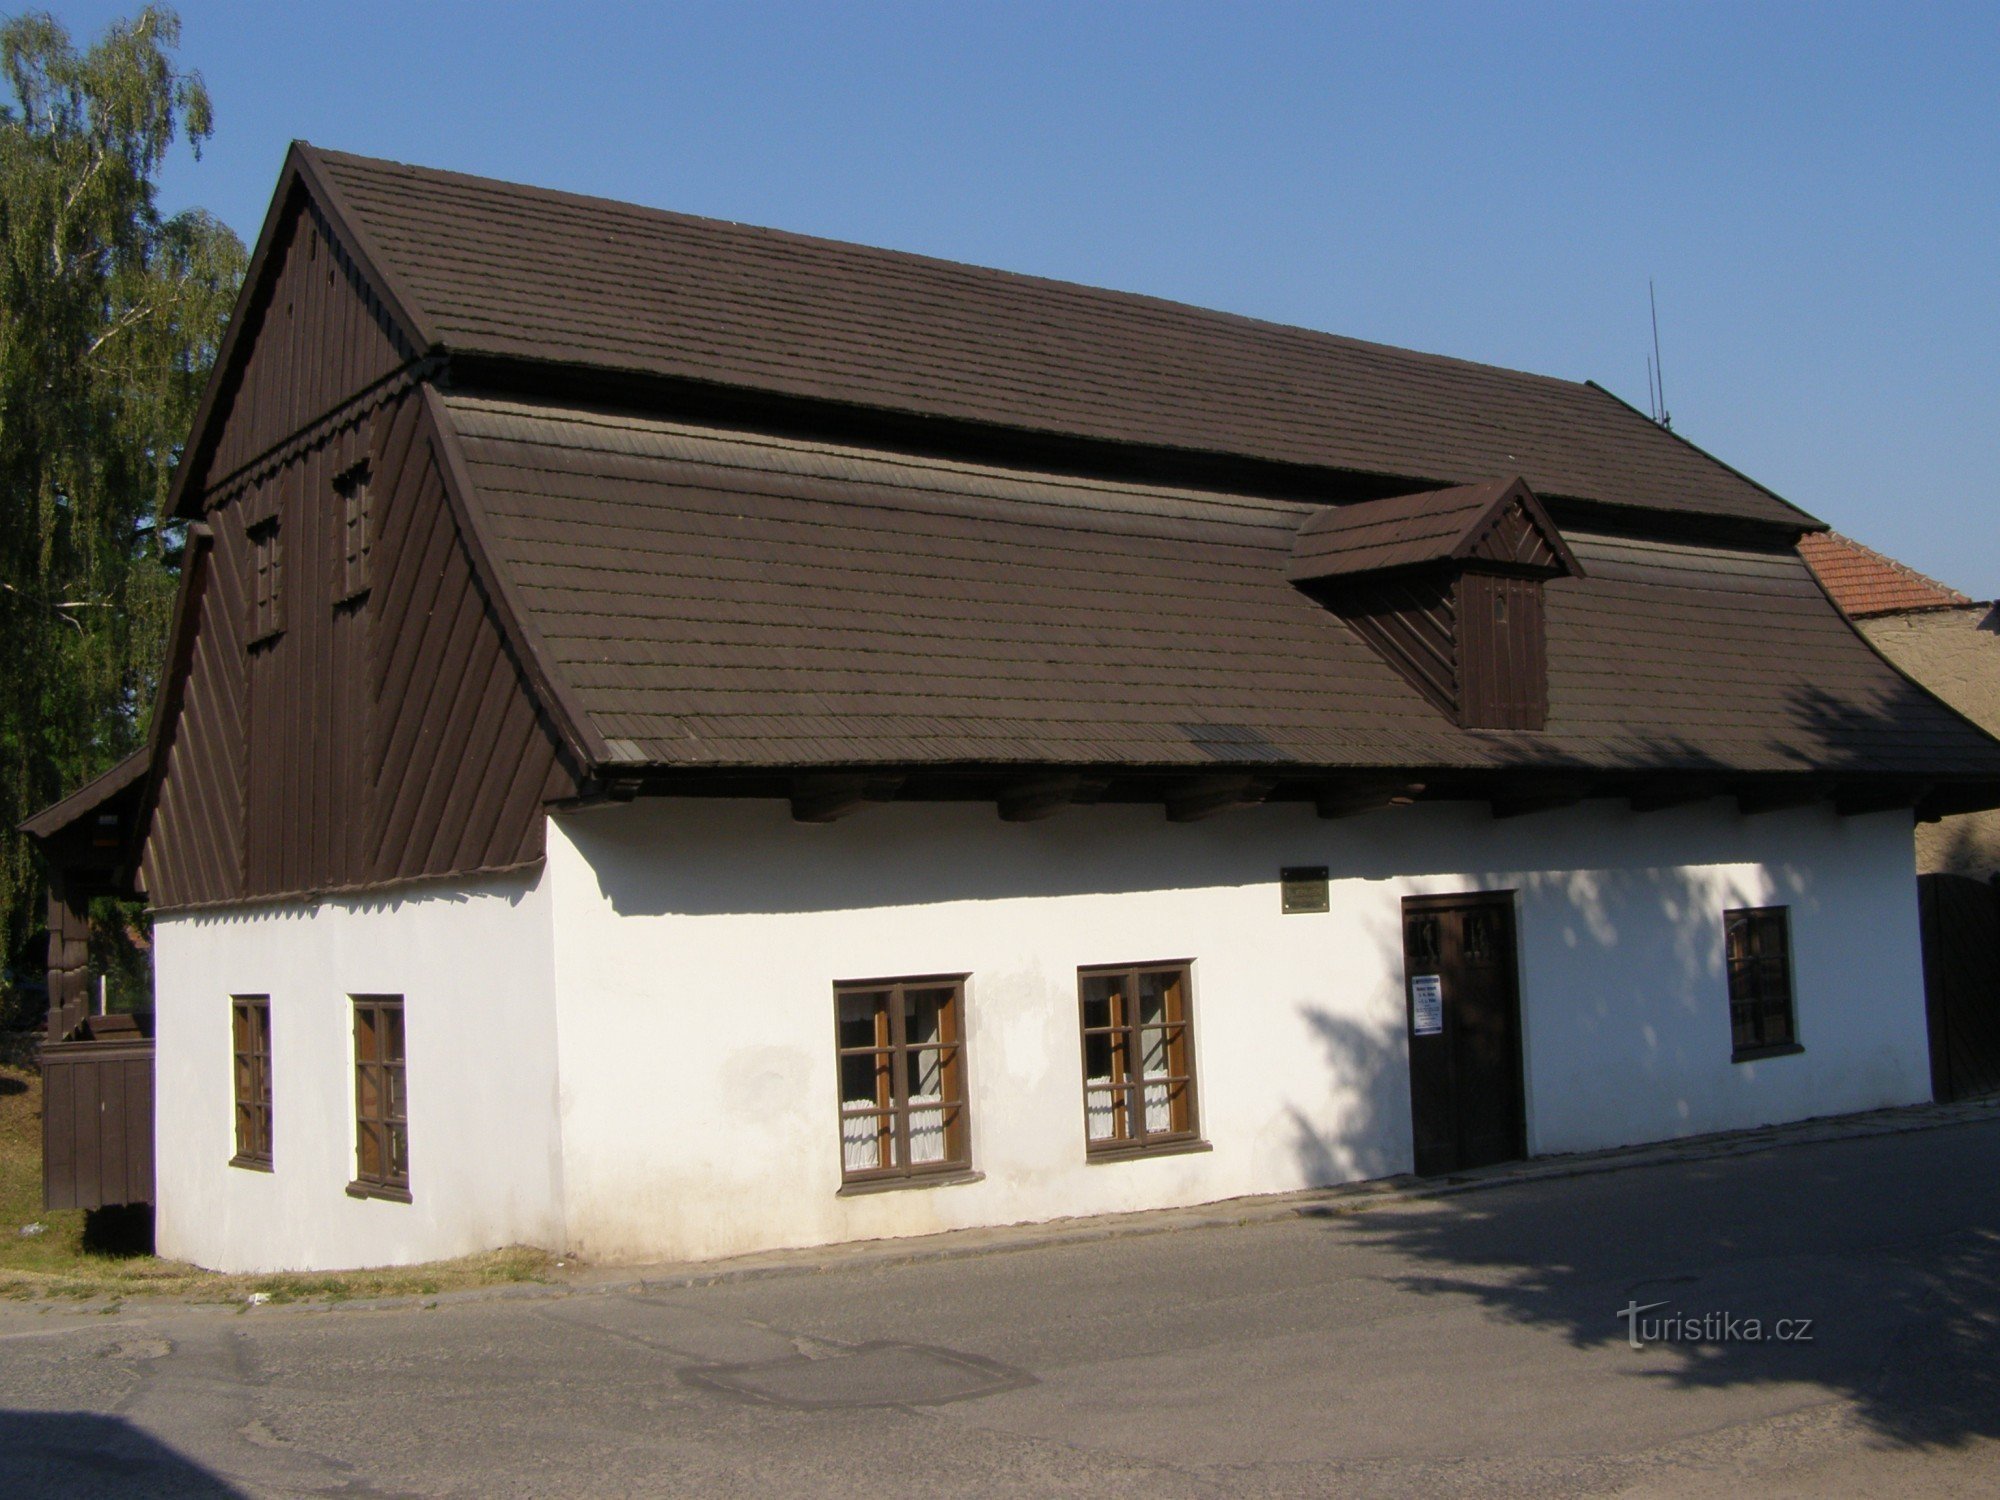 Dobruška - le lieu de naissance de FLVěk (Heka)